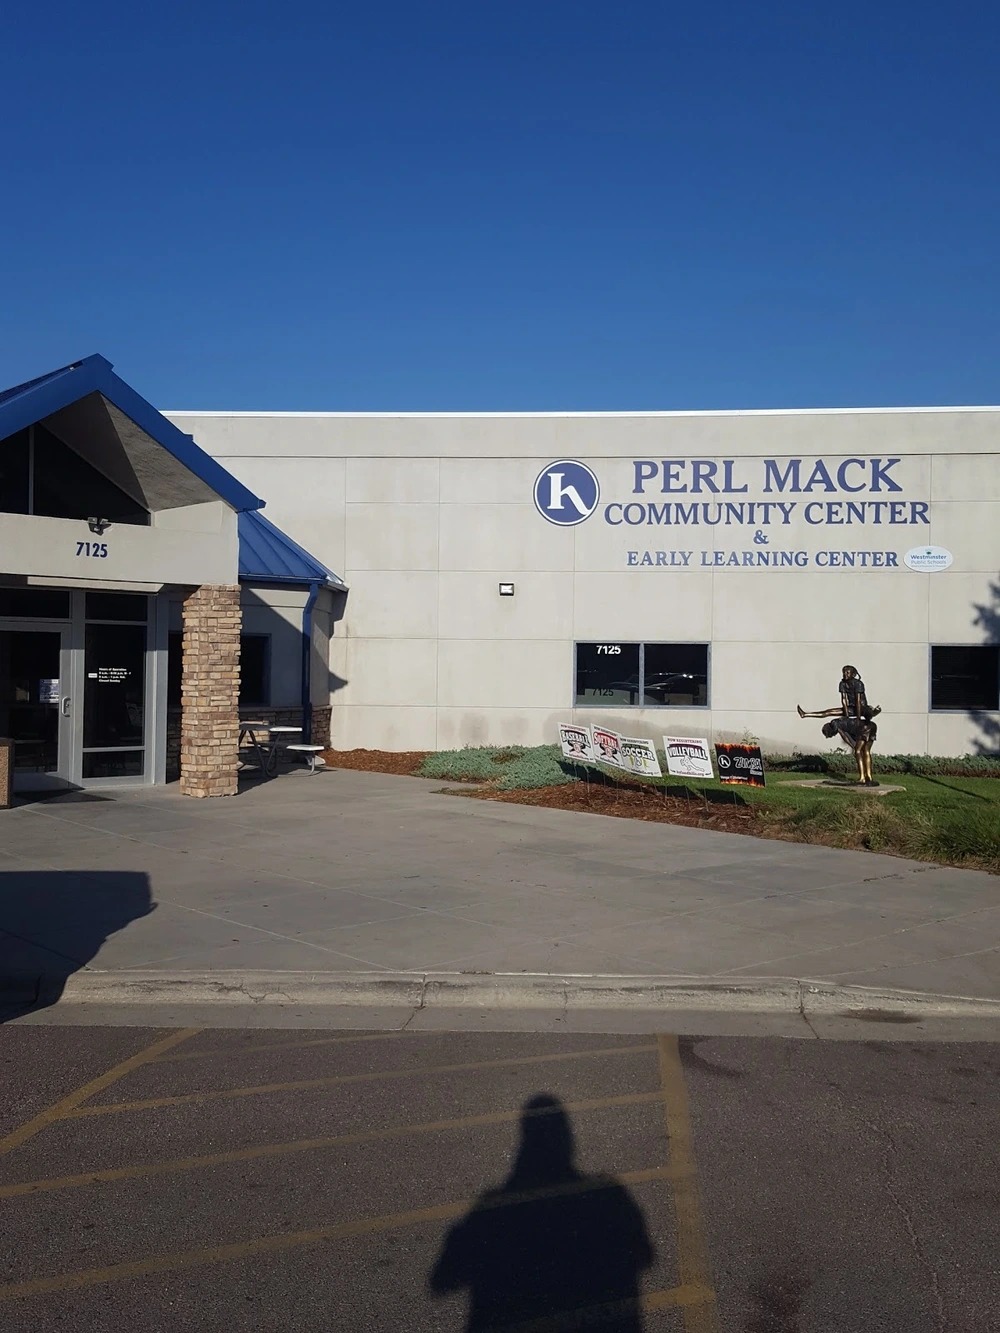 Perl Mack Community Center